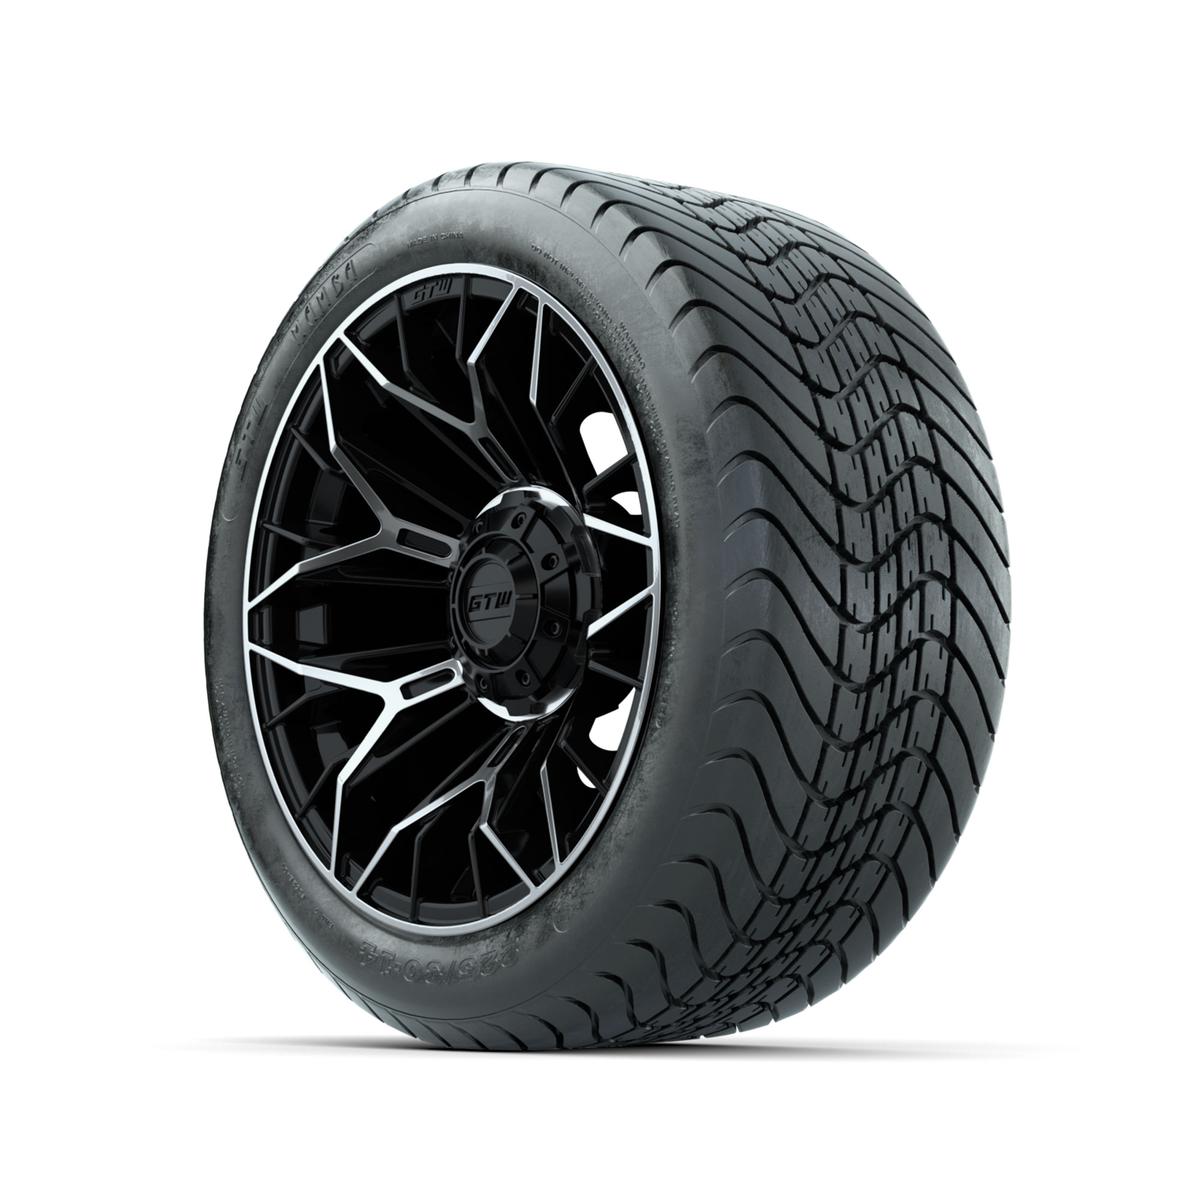 Set of (4) 14 in GTW® Stellar Machined & Black Wheels with 225/30-14 Mamba Street Tire